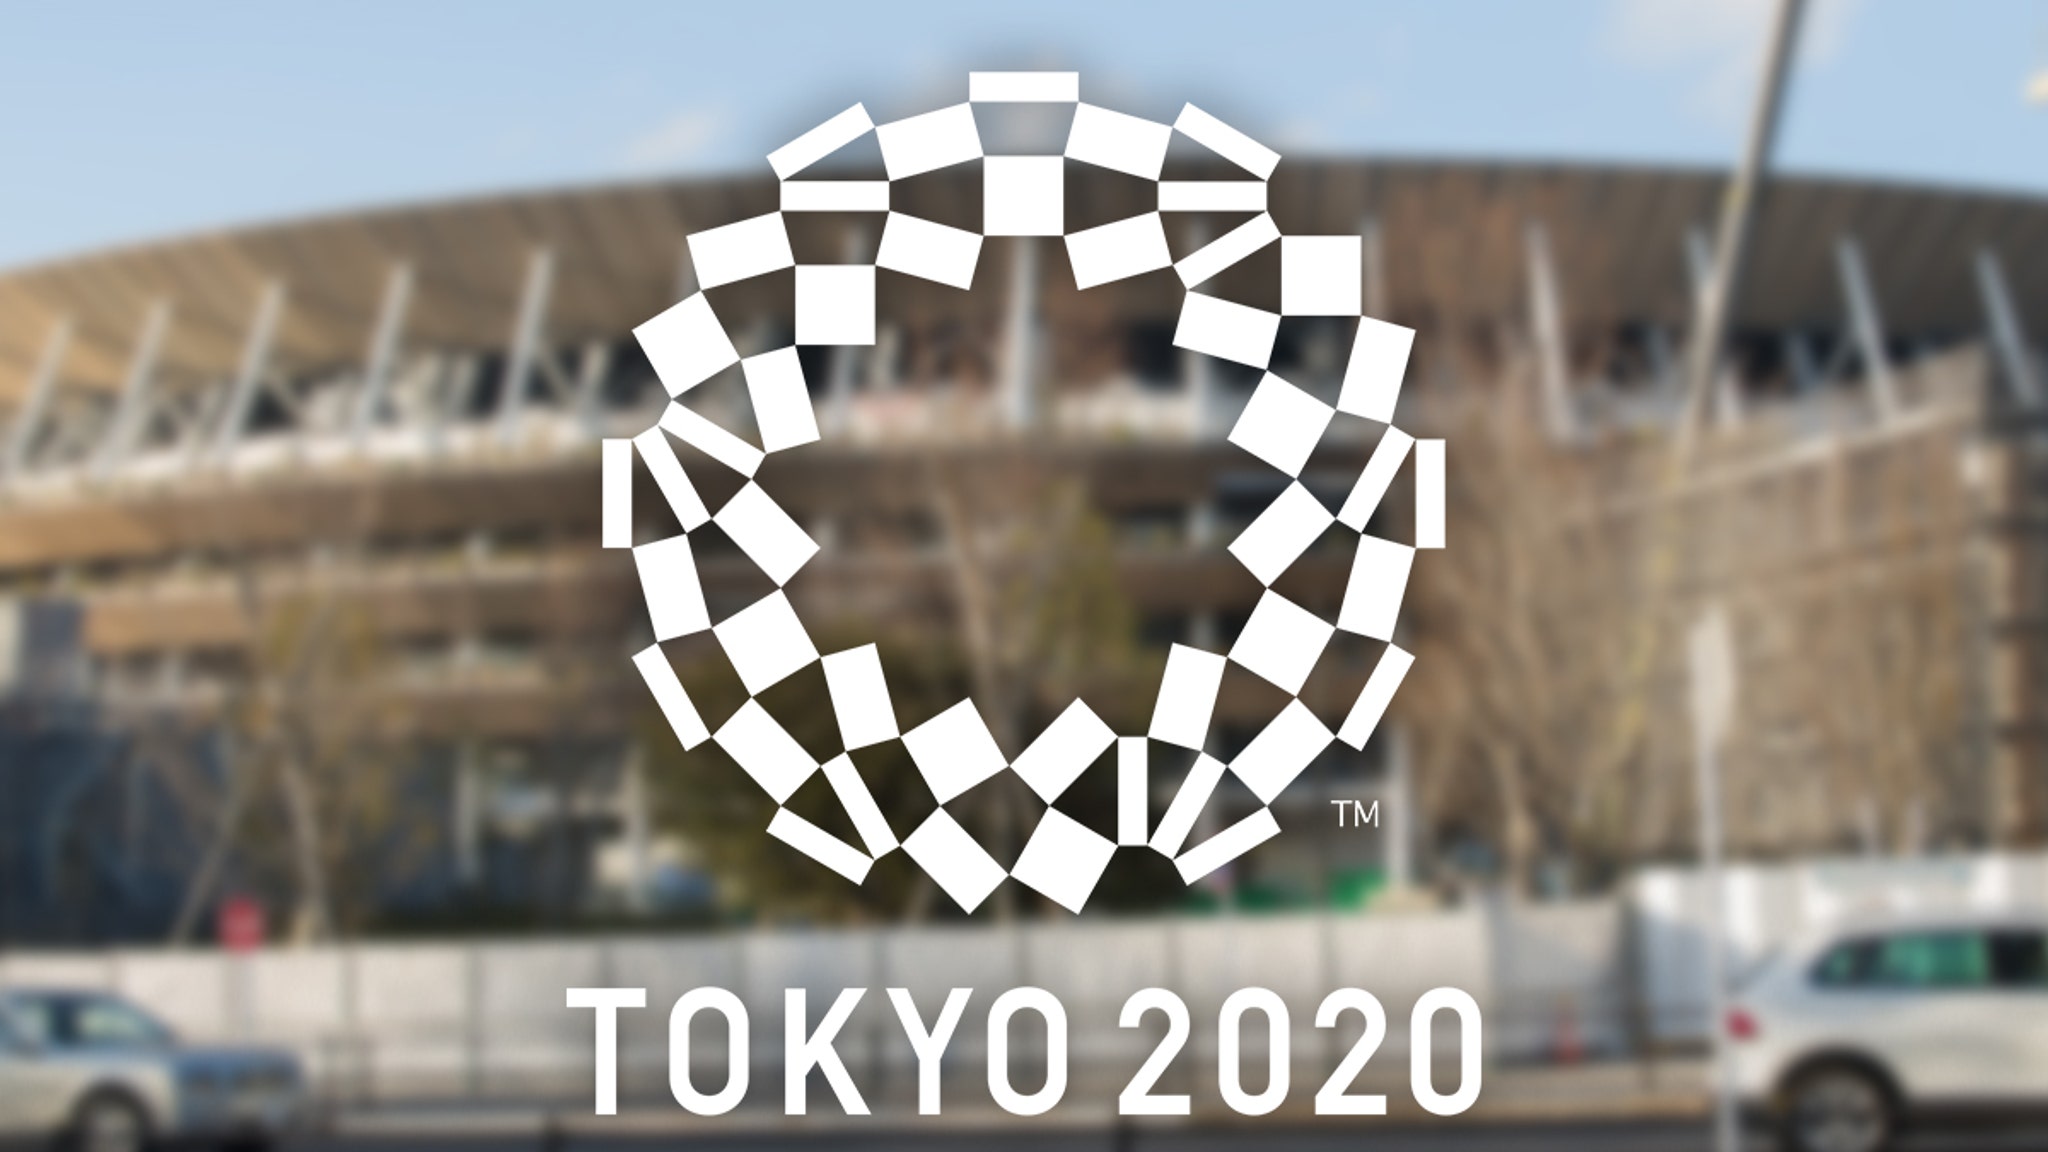 Tokyo Olympics Will Go On As Planned Despite Coronavirus, IOC Rep Says